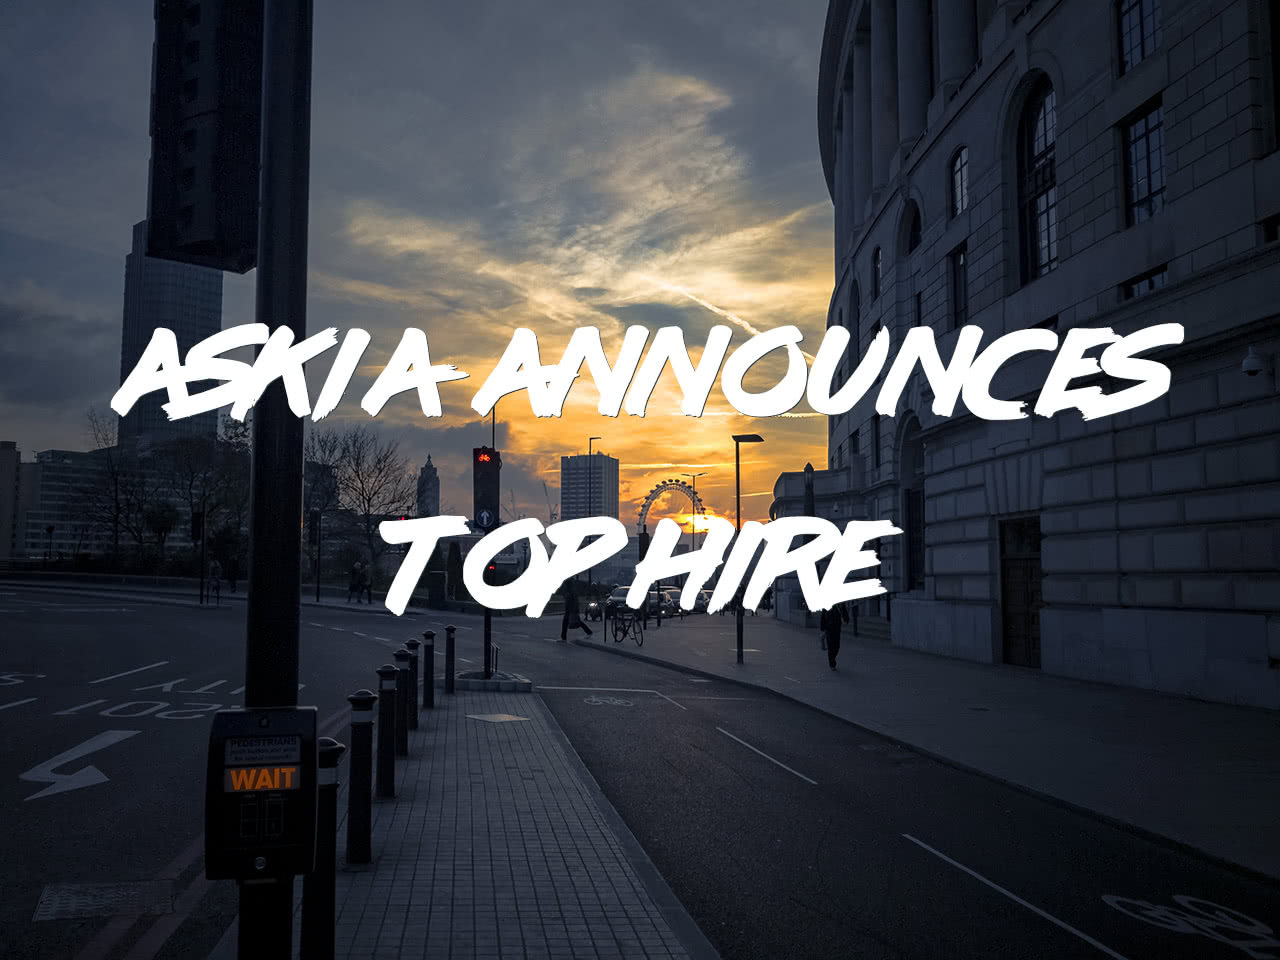 Askia announces top hire!